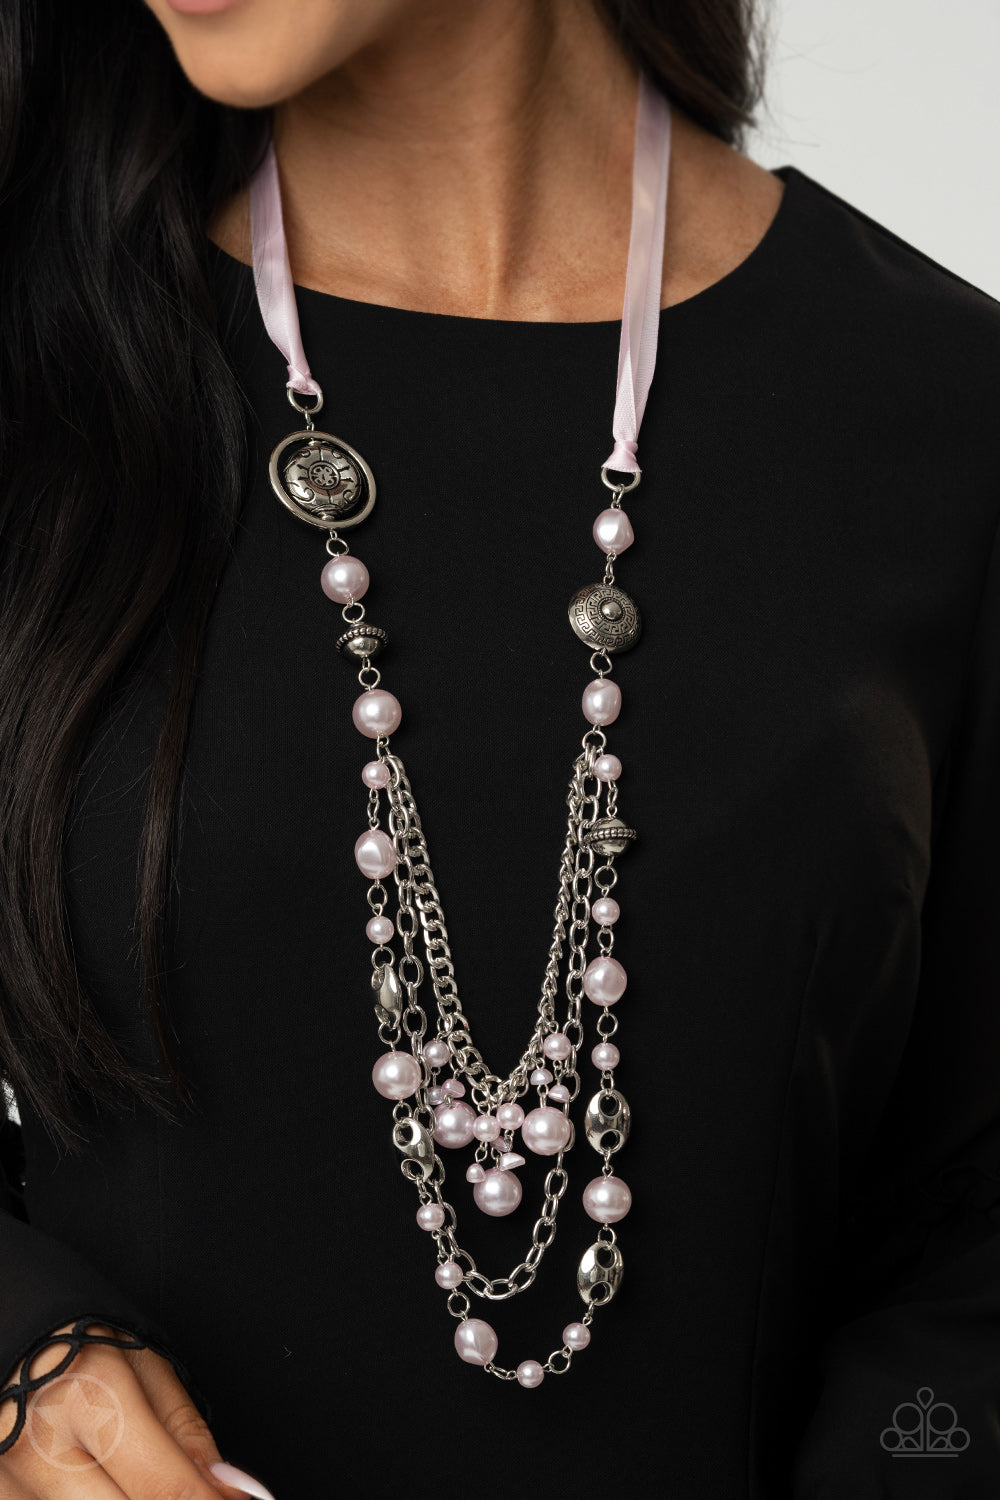 Buy Pink Necklaces & Pendants for Women by Accessorize London Online |  Ajio.com